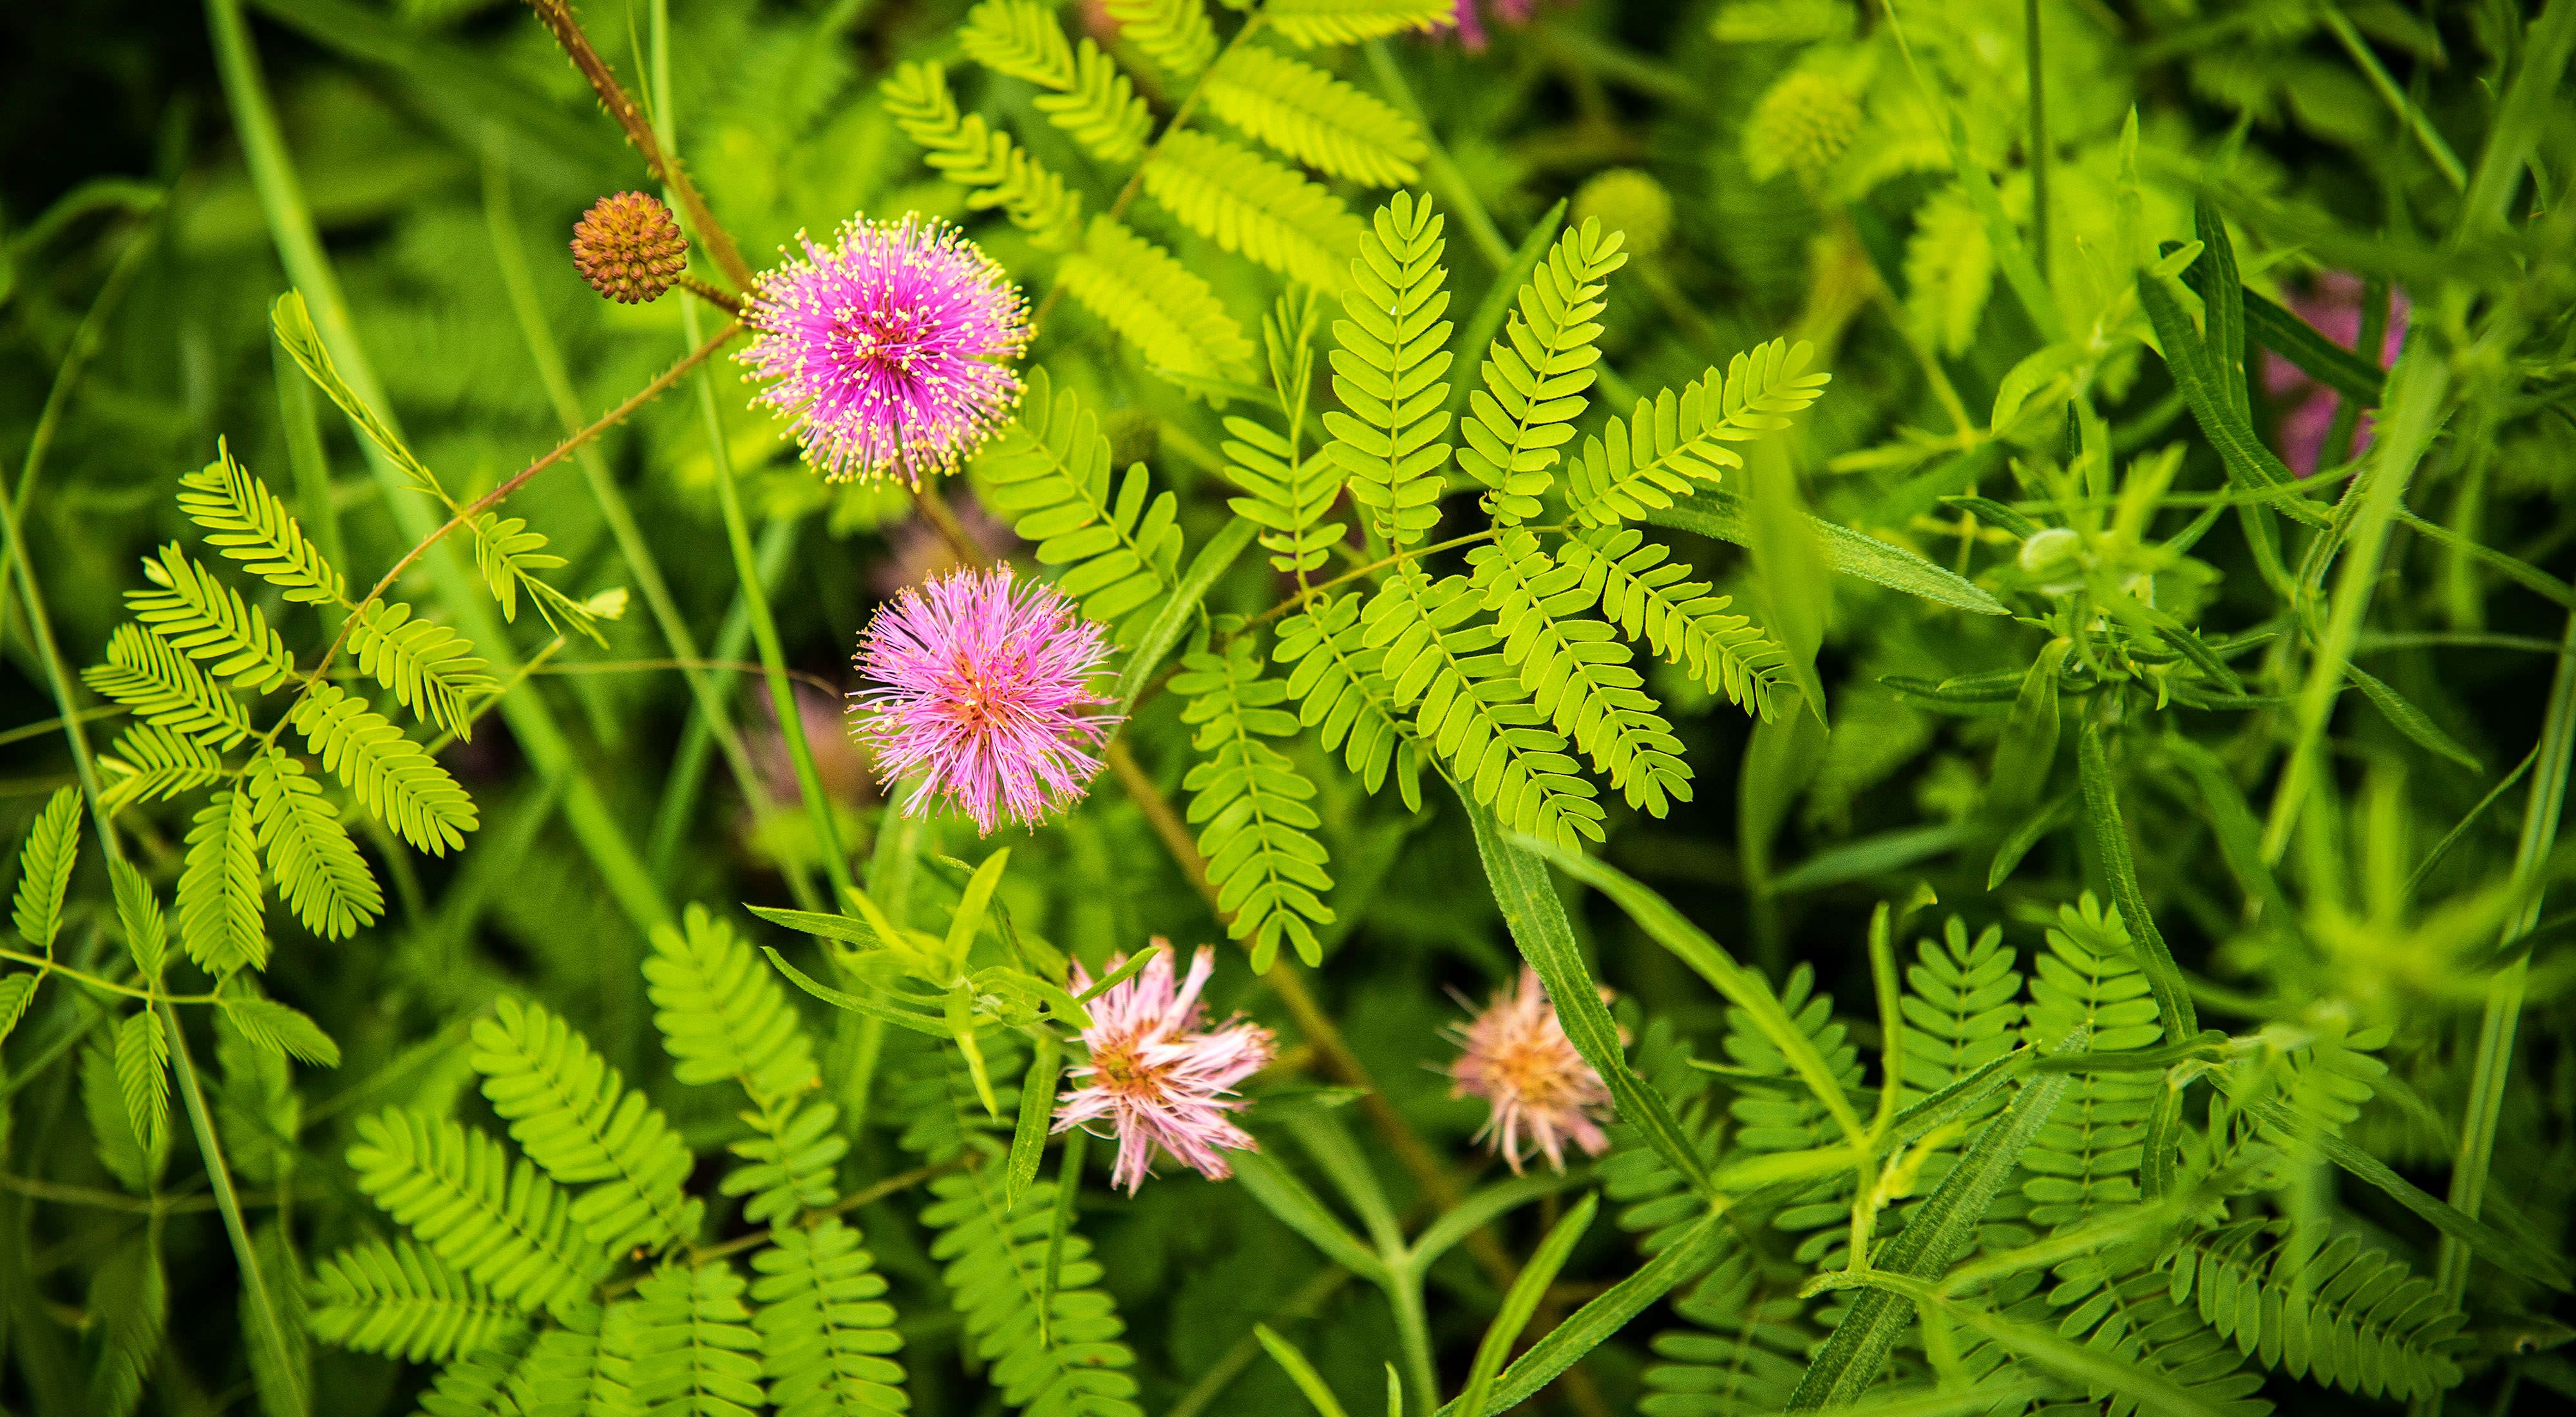 Bright green plants with pom-pom-like bright pink flowers.